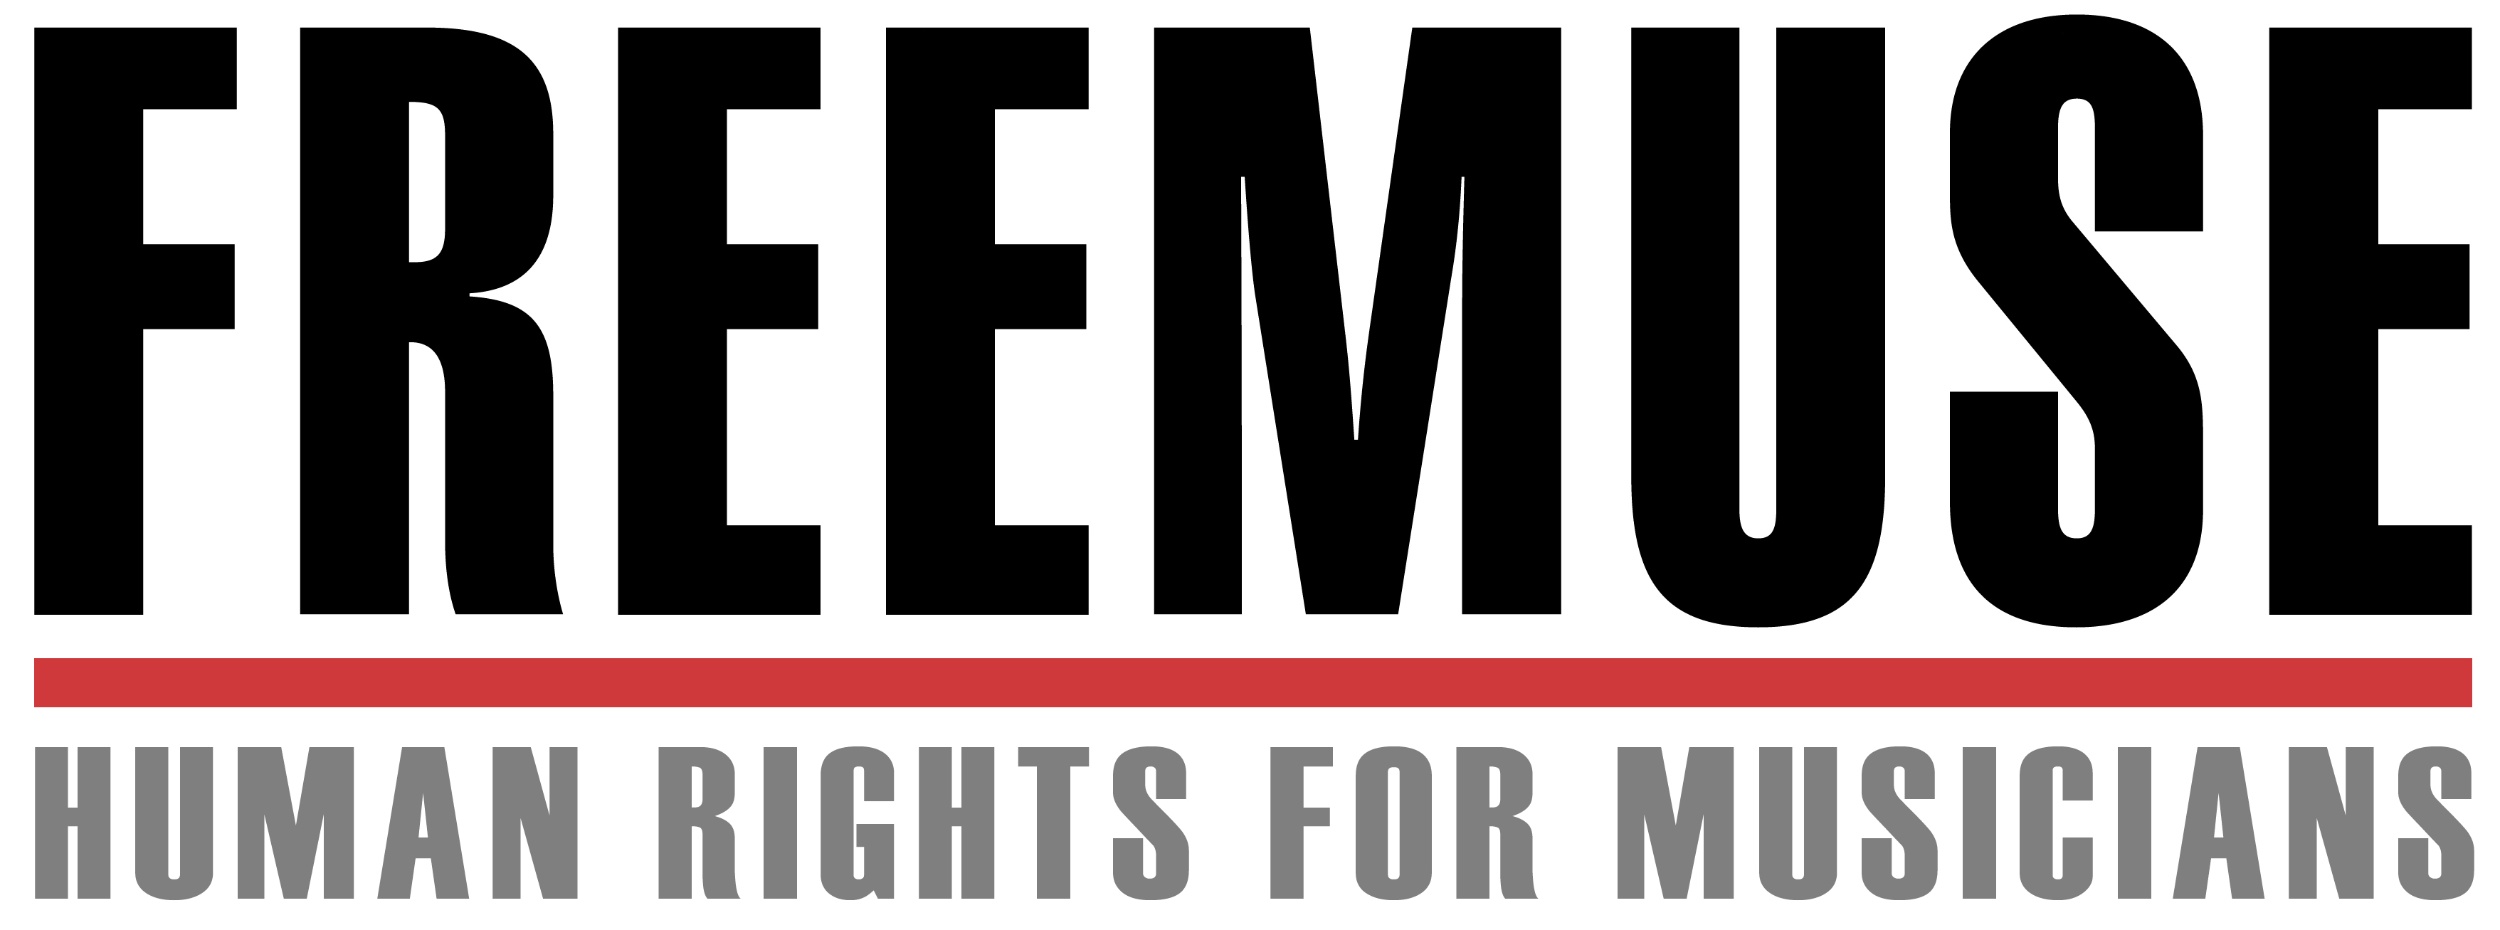 GreedyforBestMusic-Freemuse-HumanRightsForMusicians-logo